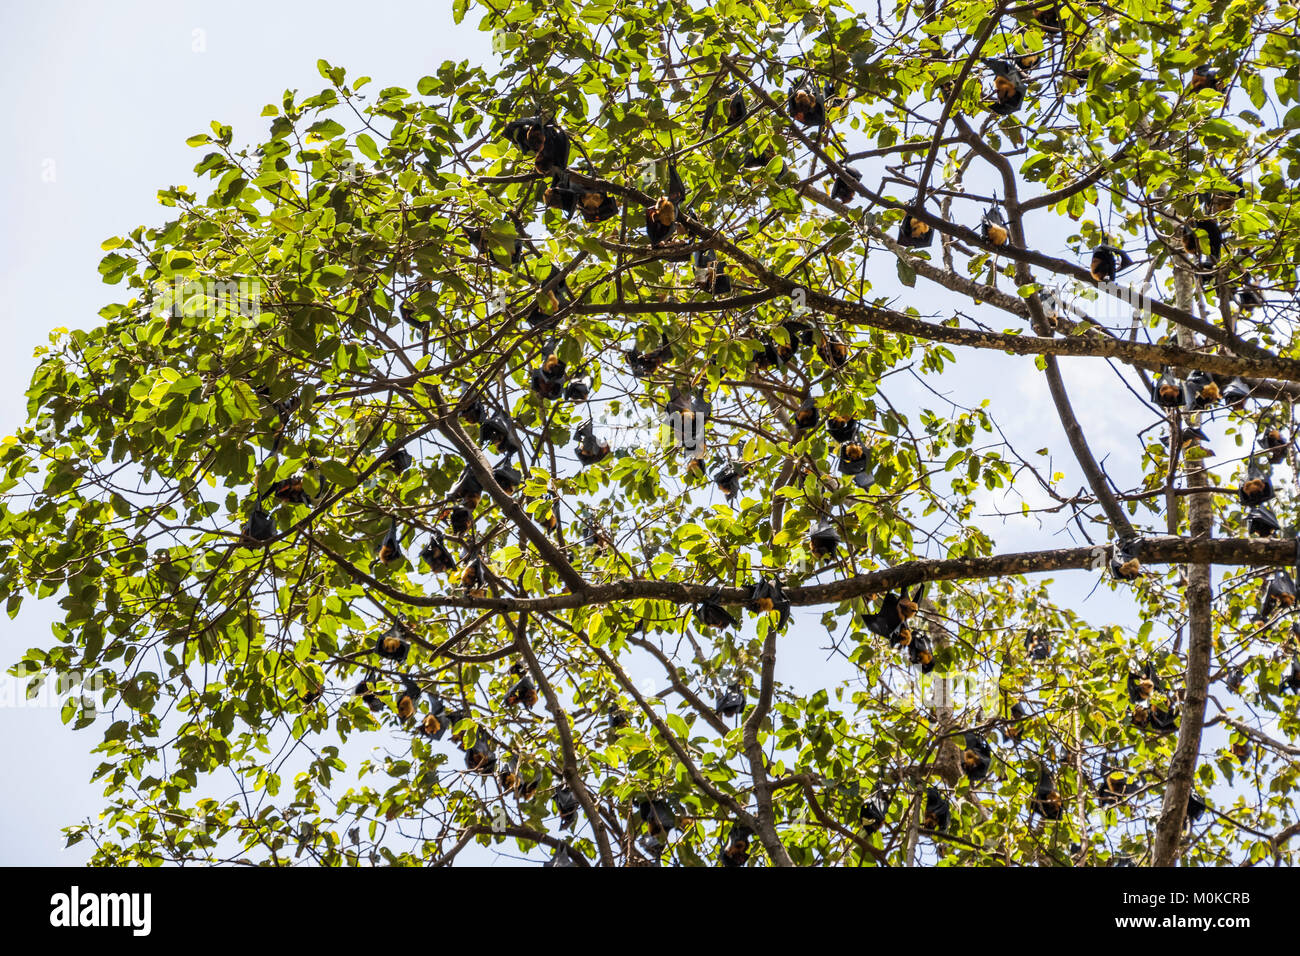 Fruit bats in a tree; Siem Reap, Cambodia Stock Photo